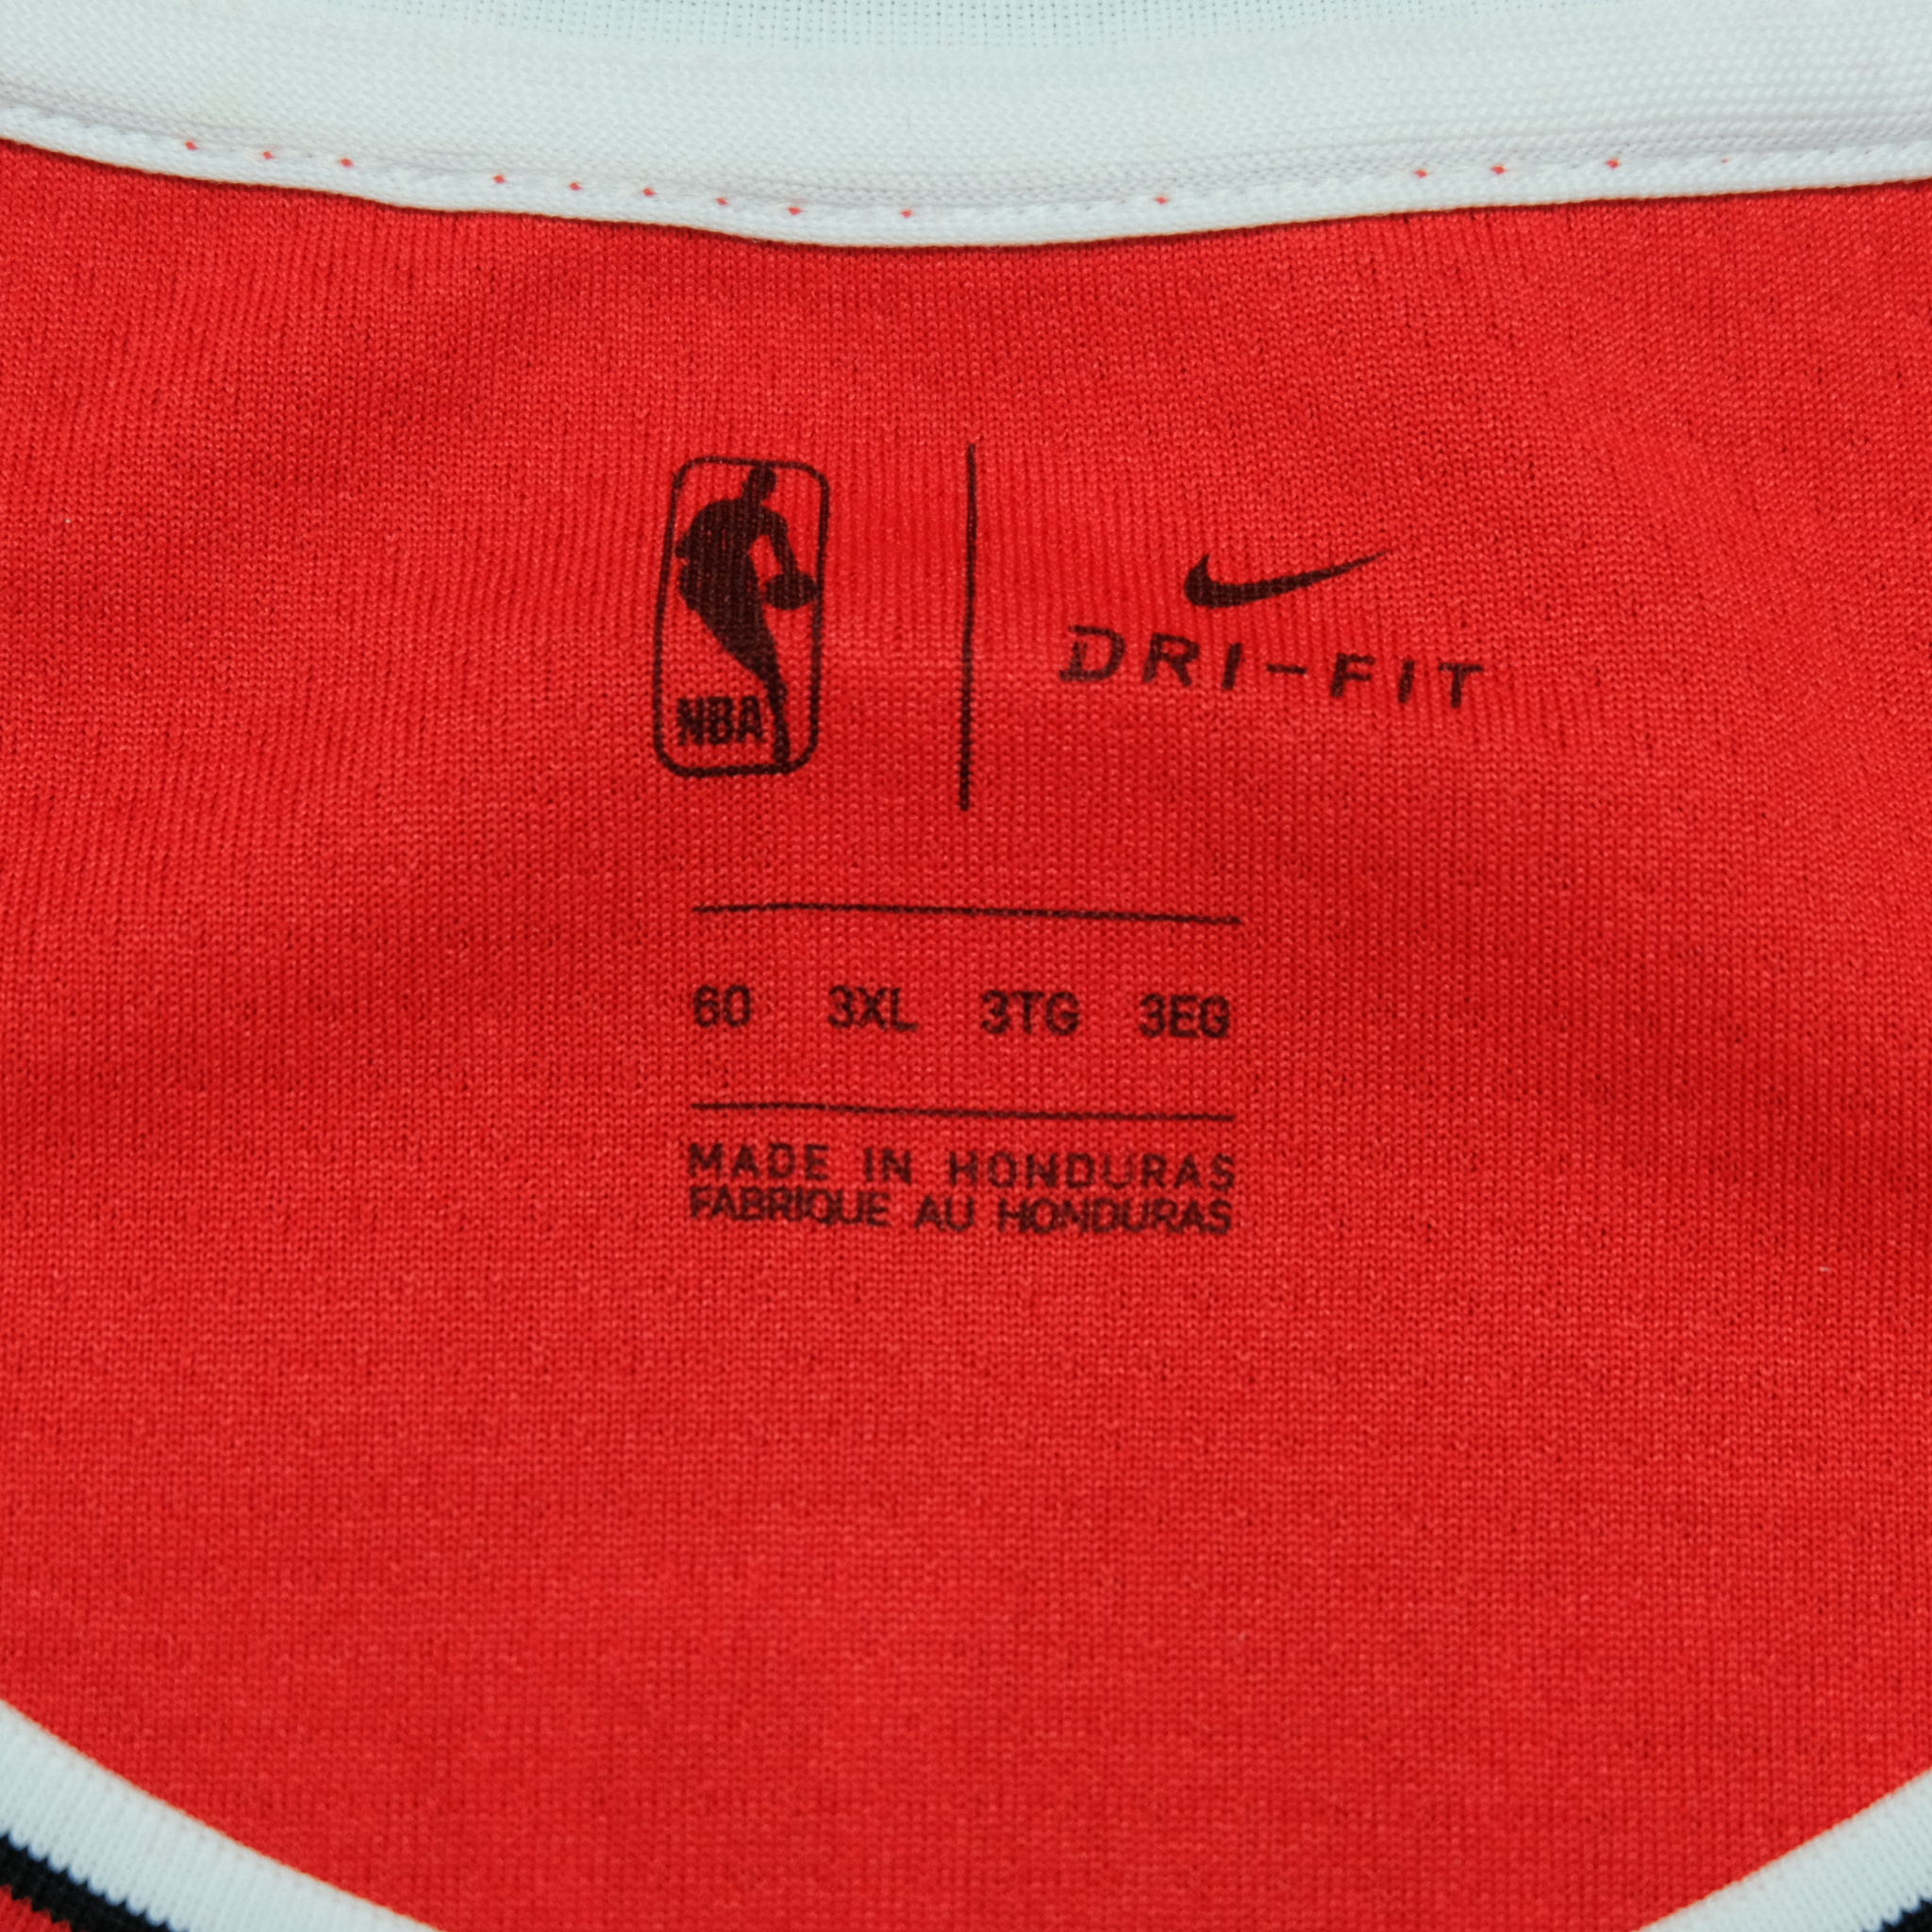 Vintage Nike Connect Michael Jordan Chicago Bulls Jersey NWT